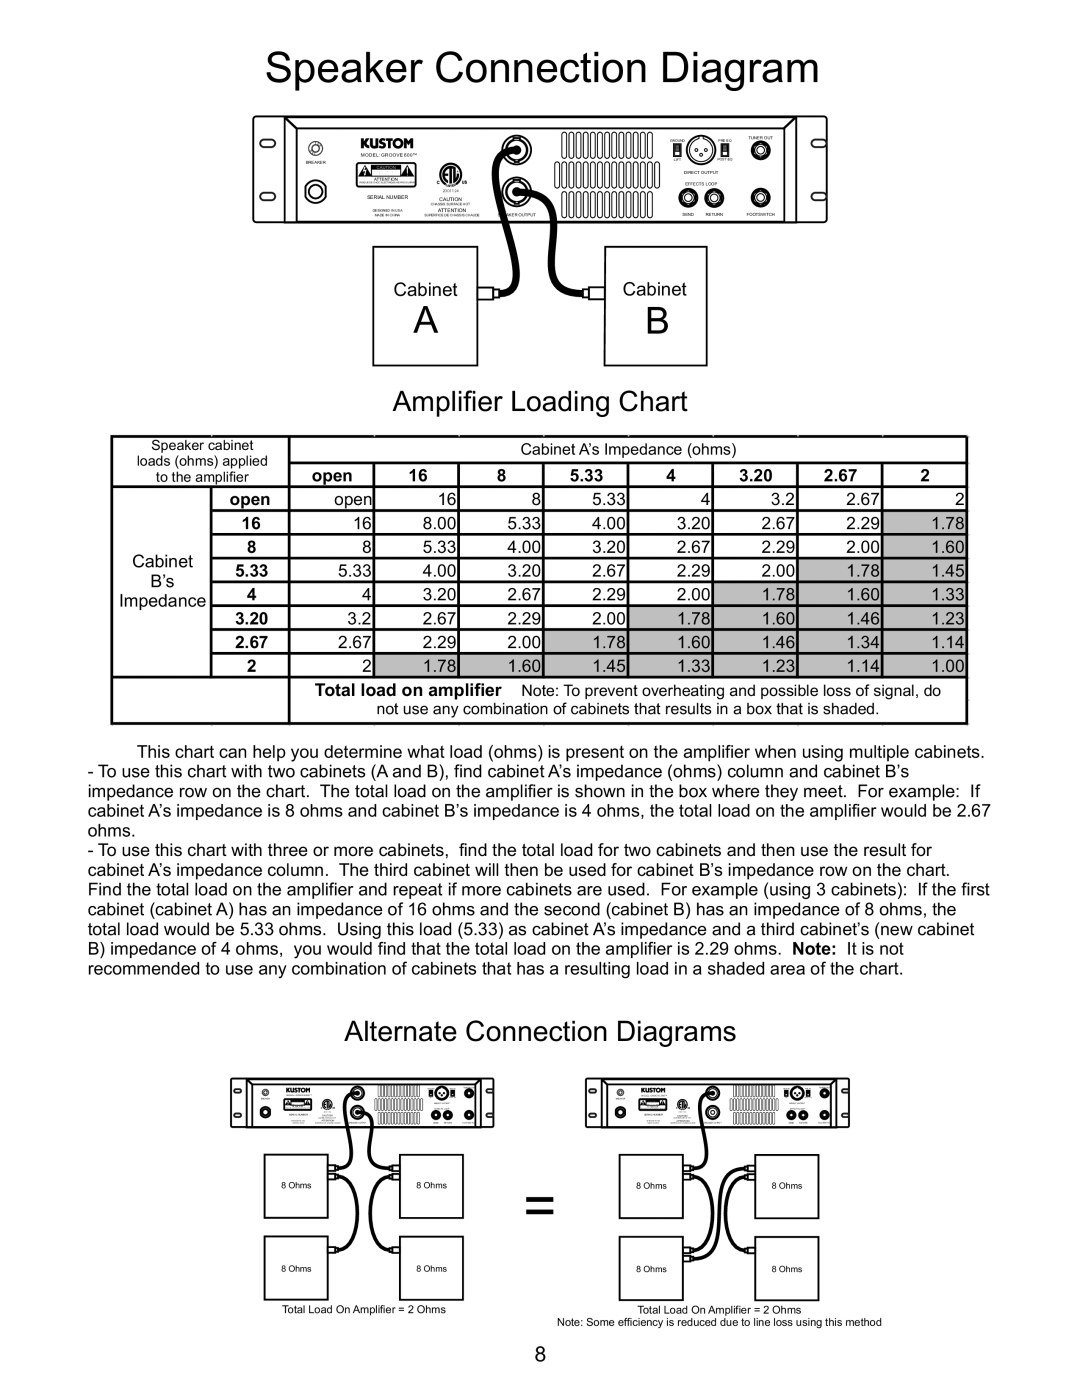 Kustom GROOVE 600TM Speaker Connection Diagram, Amplifier Loading Chart, Alternate Connection Diagrams, open, 5.33, 3.20 